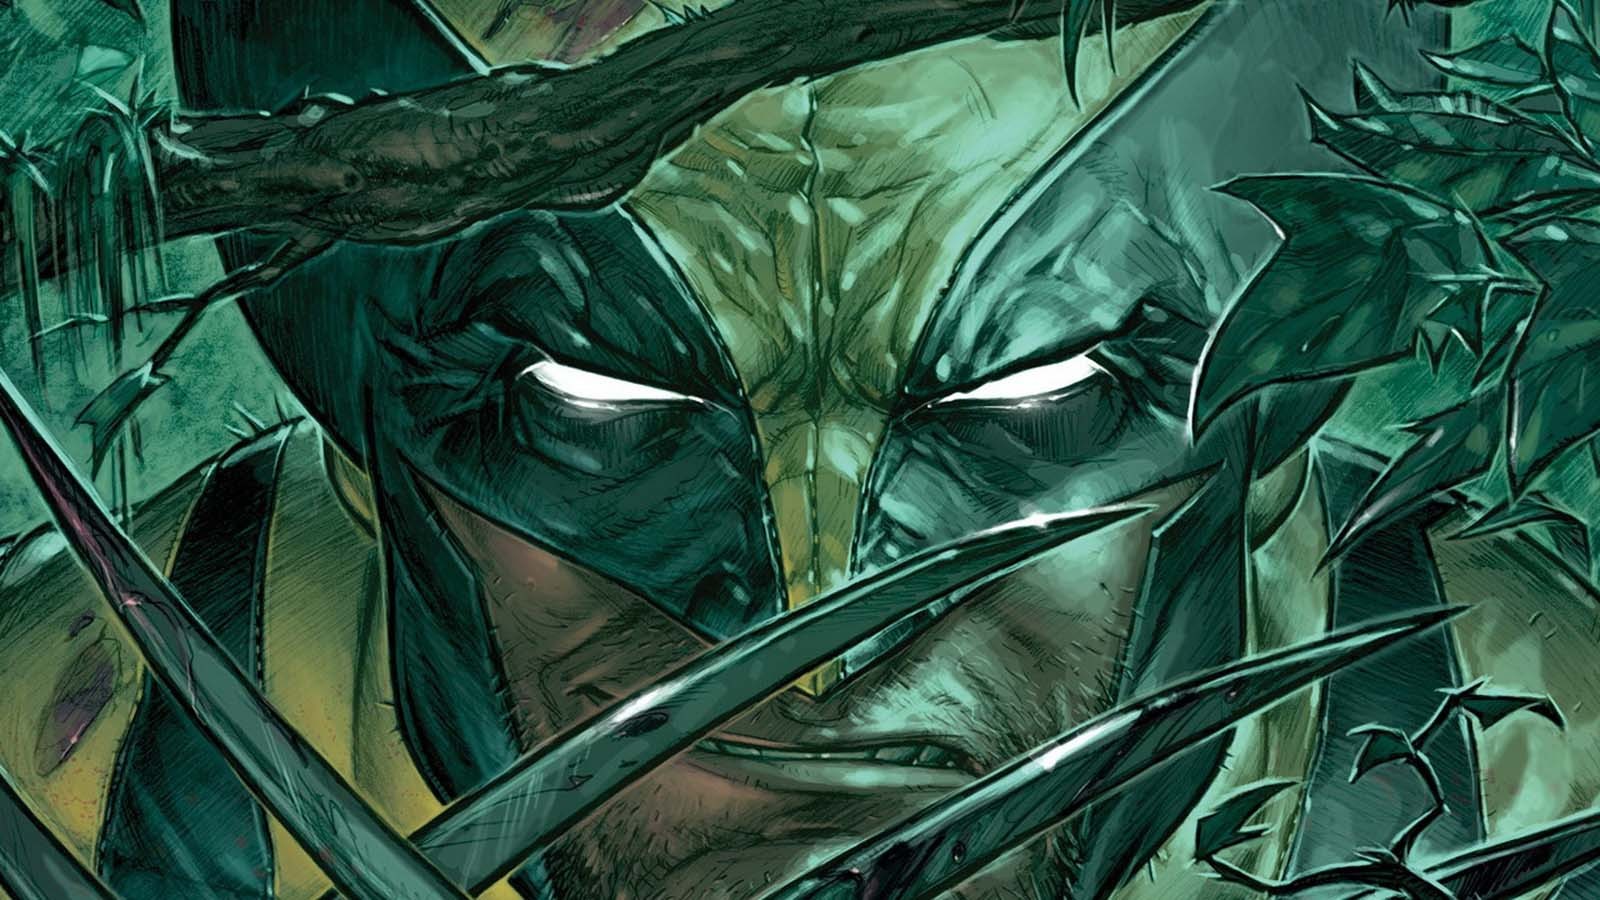 General 1600x900 comic art comics claws glowing eyes face closeup Wolverine X-Men angry mask men beard green